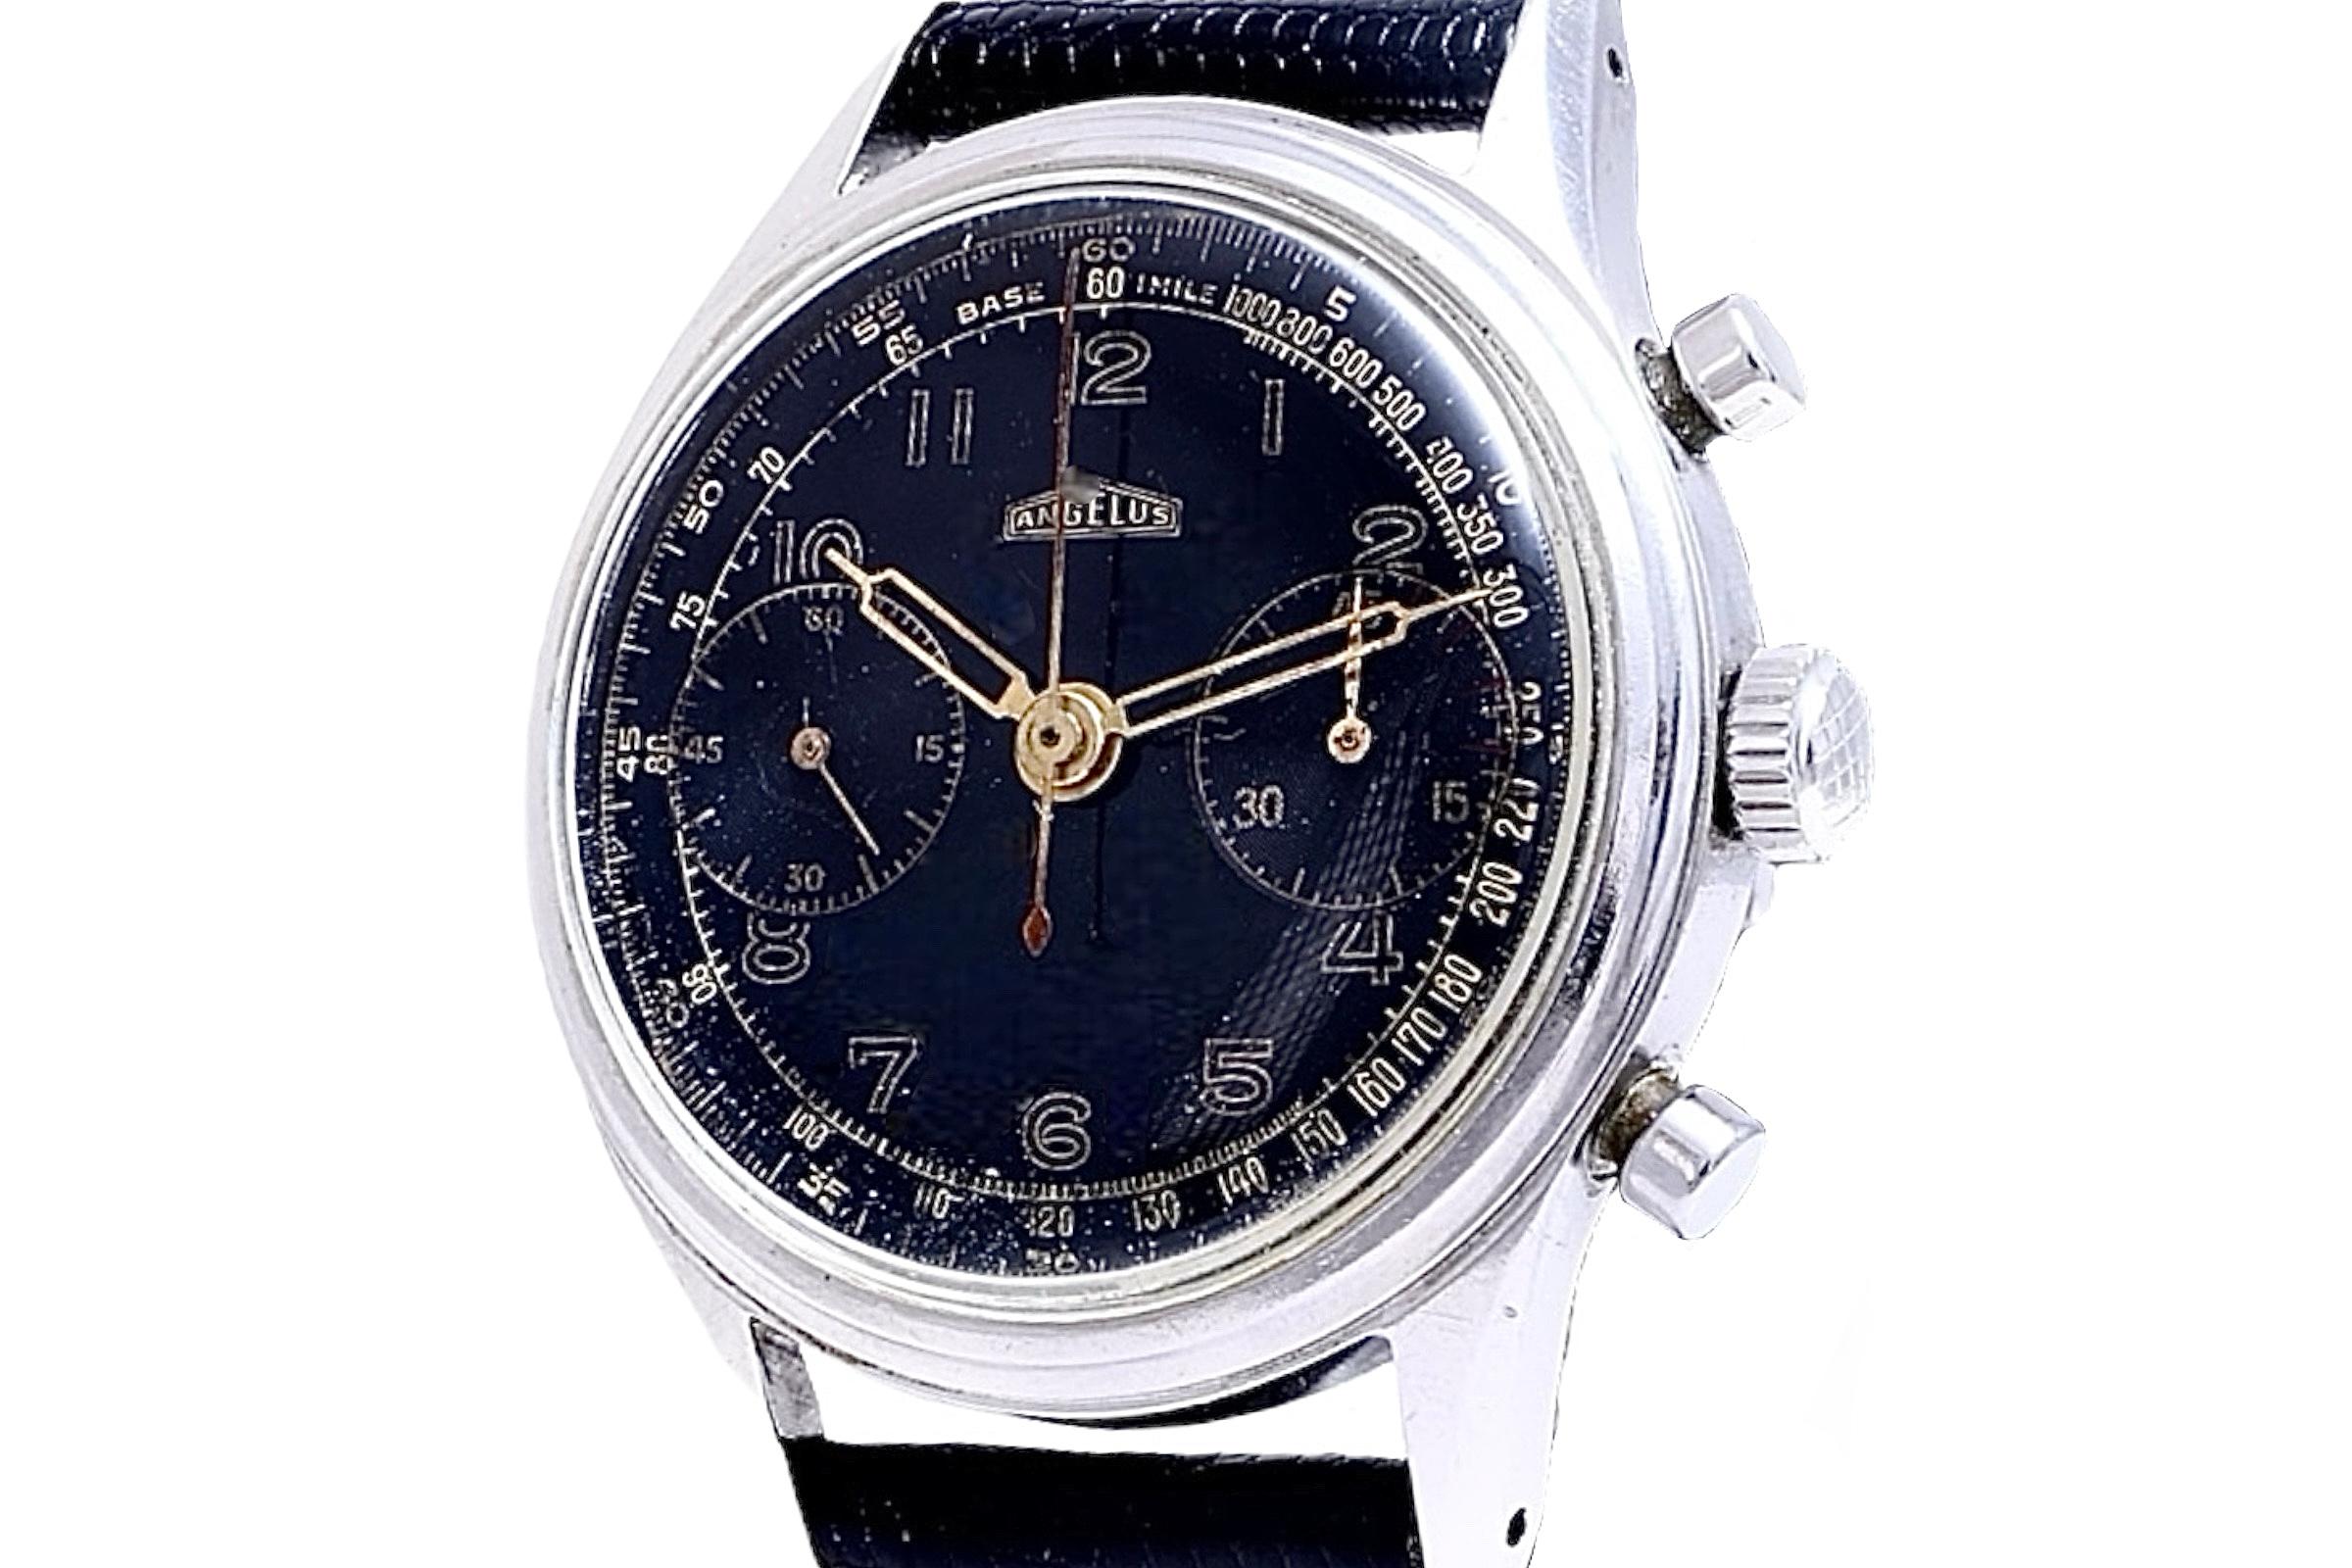 Steel Collectors Angelus Jumbo Chronograph Wrist Watch Gilt Dial For Sale